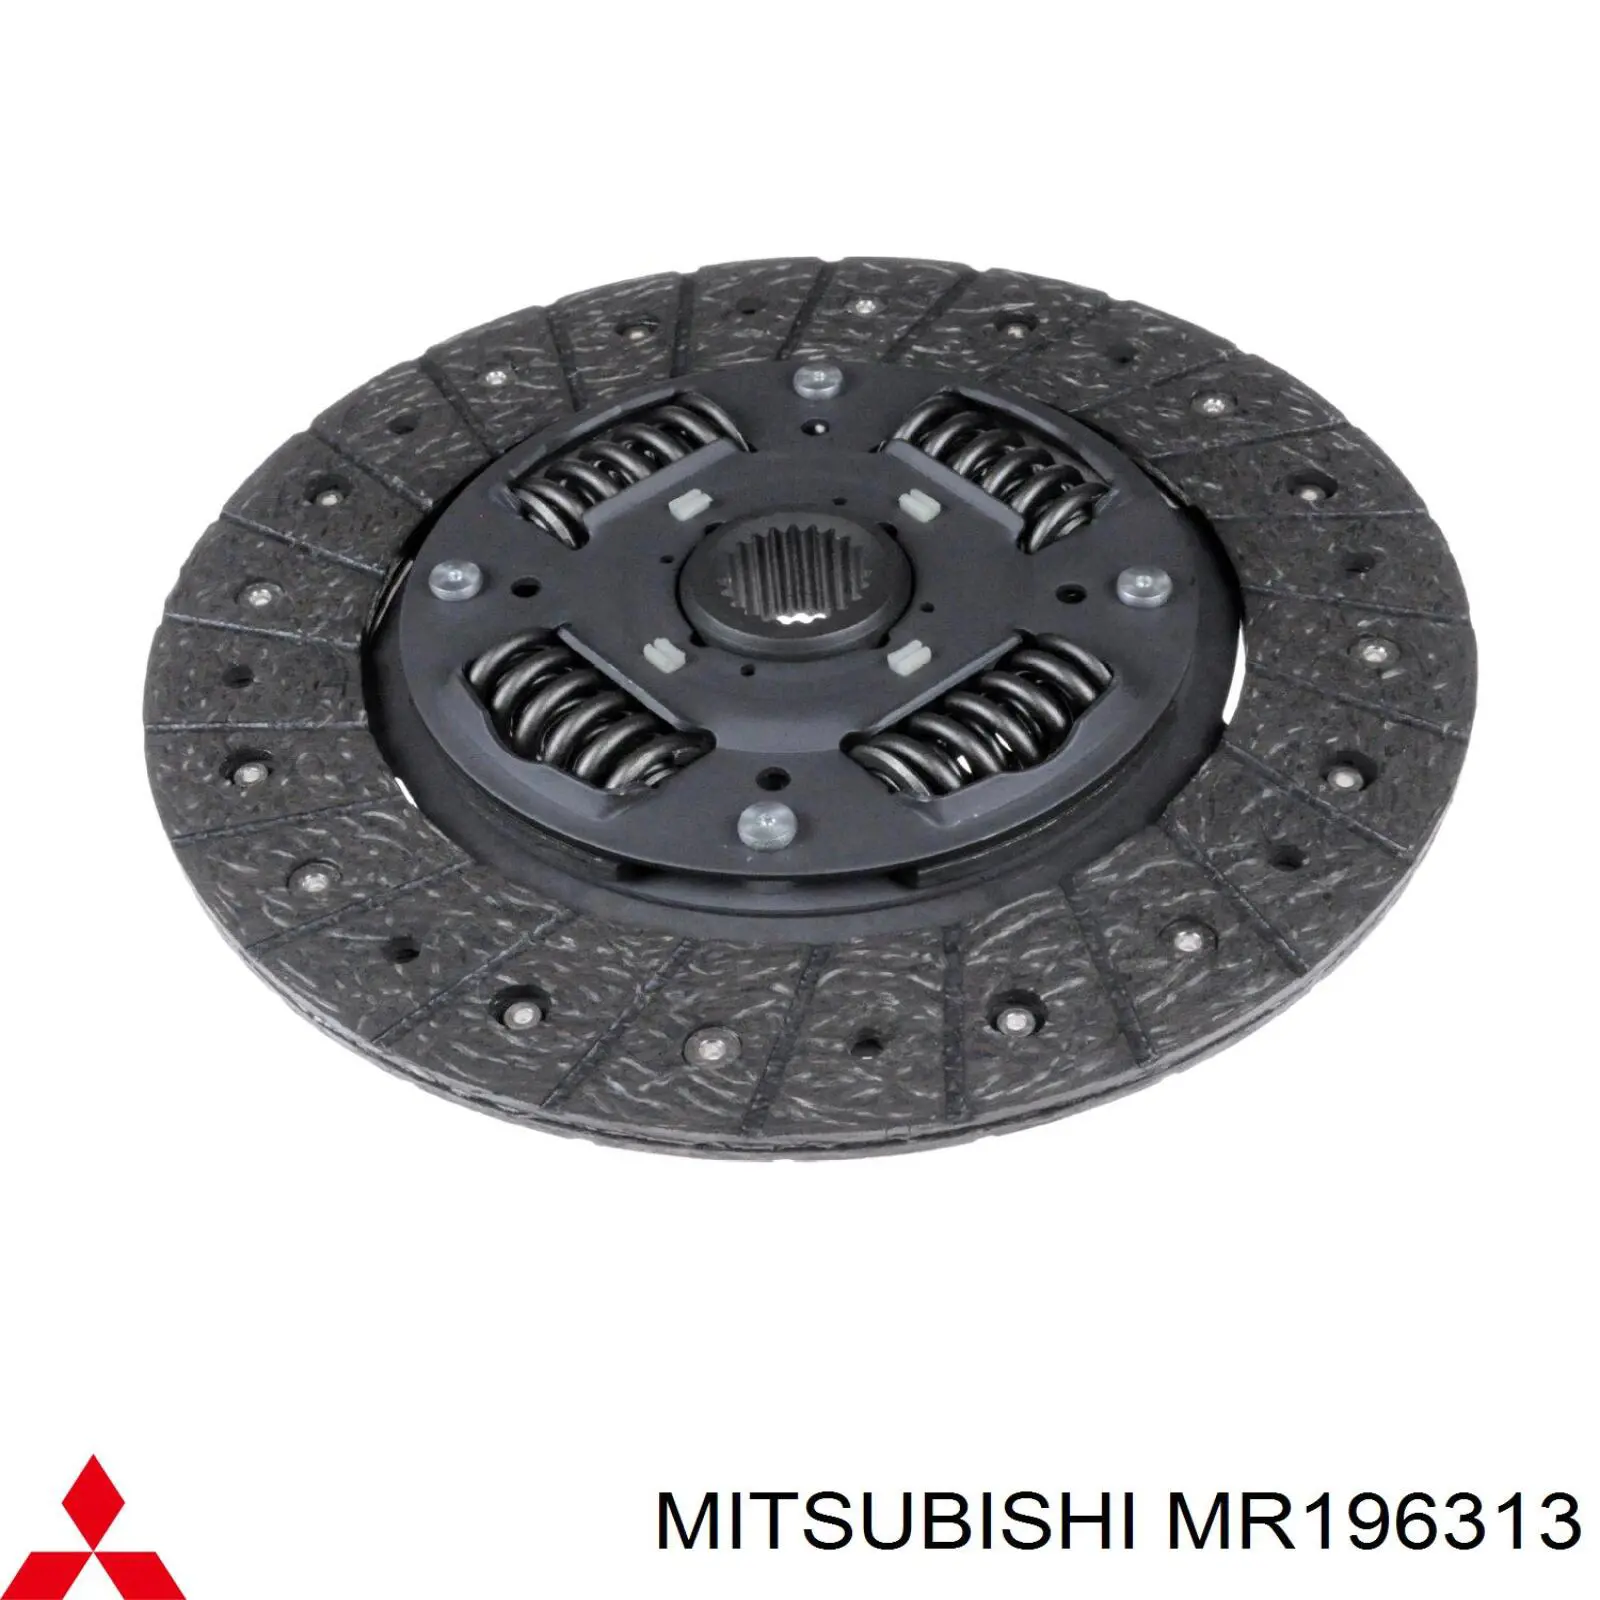 MR196313 Mitsubishi disco de embrague